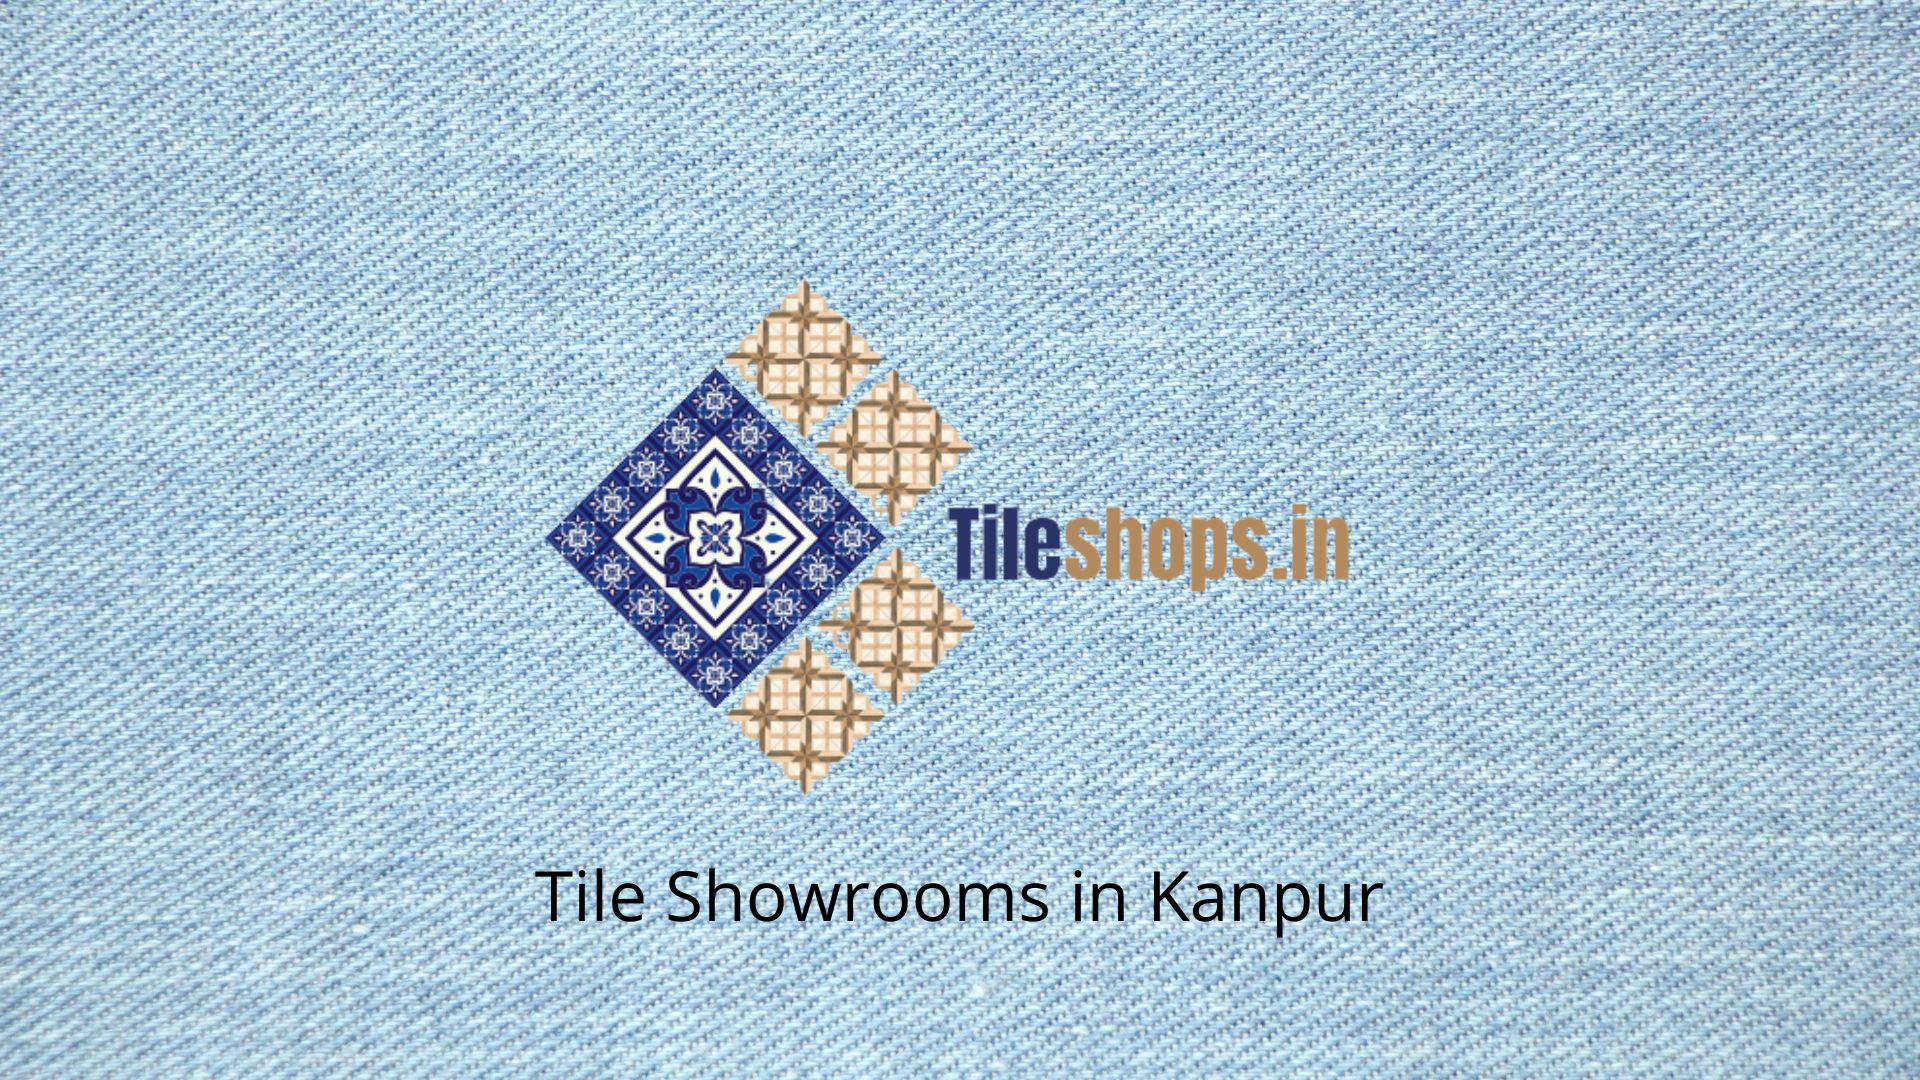 Tile Shops in Kanpur